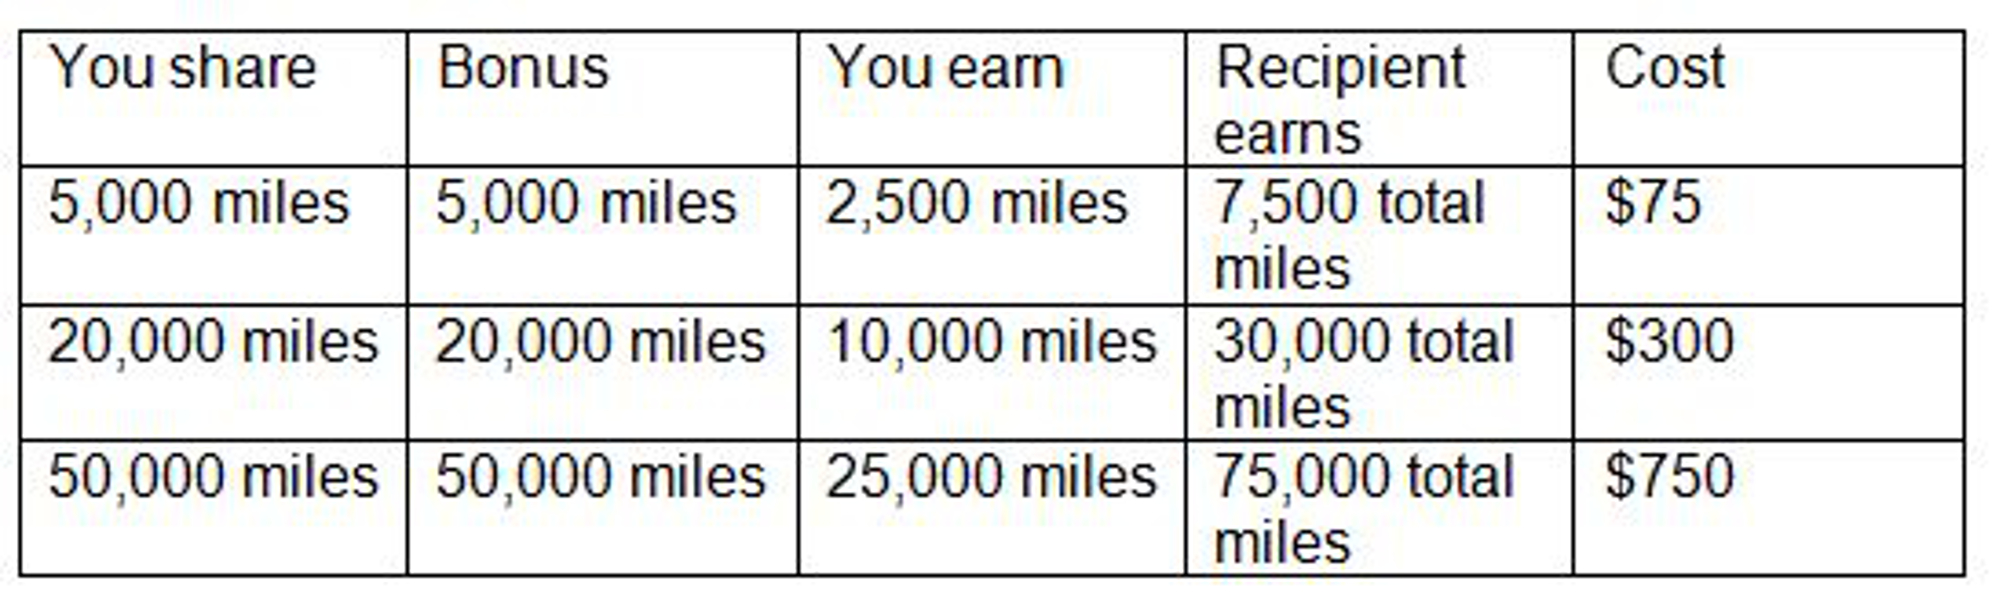 US Airways Share Miles Bonus Chart. June 2014